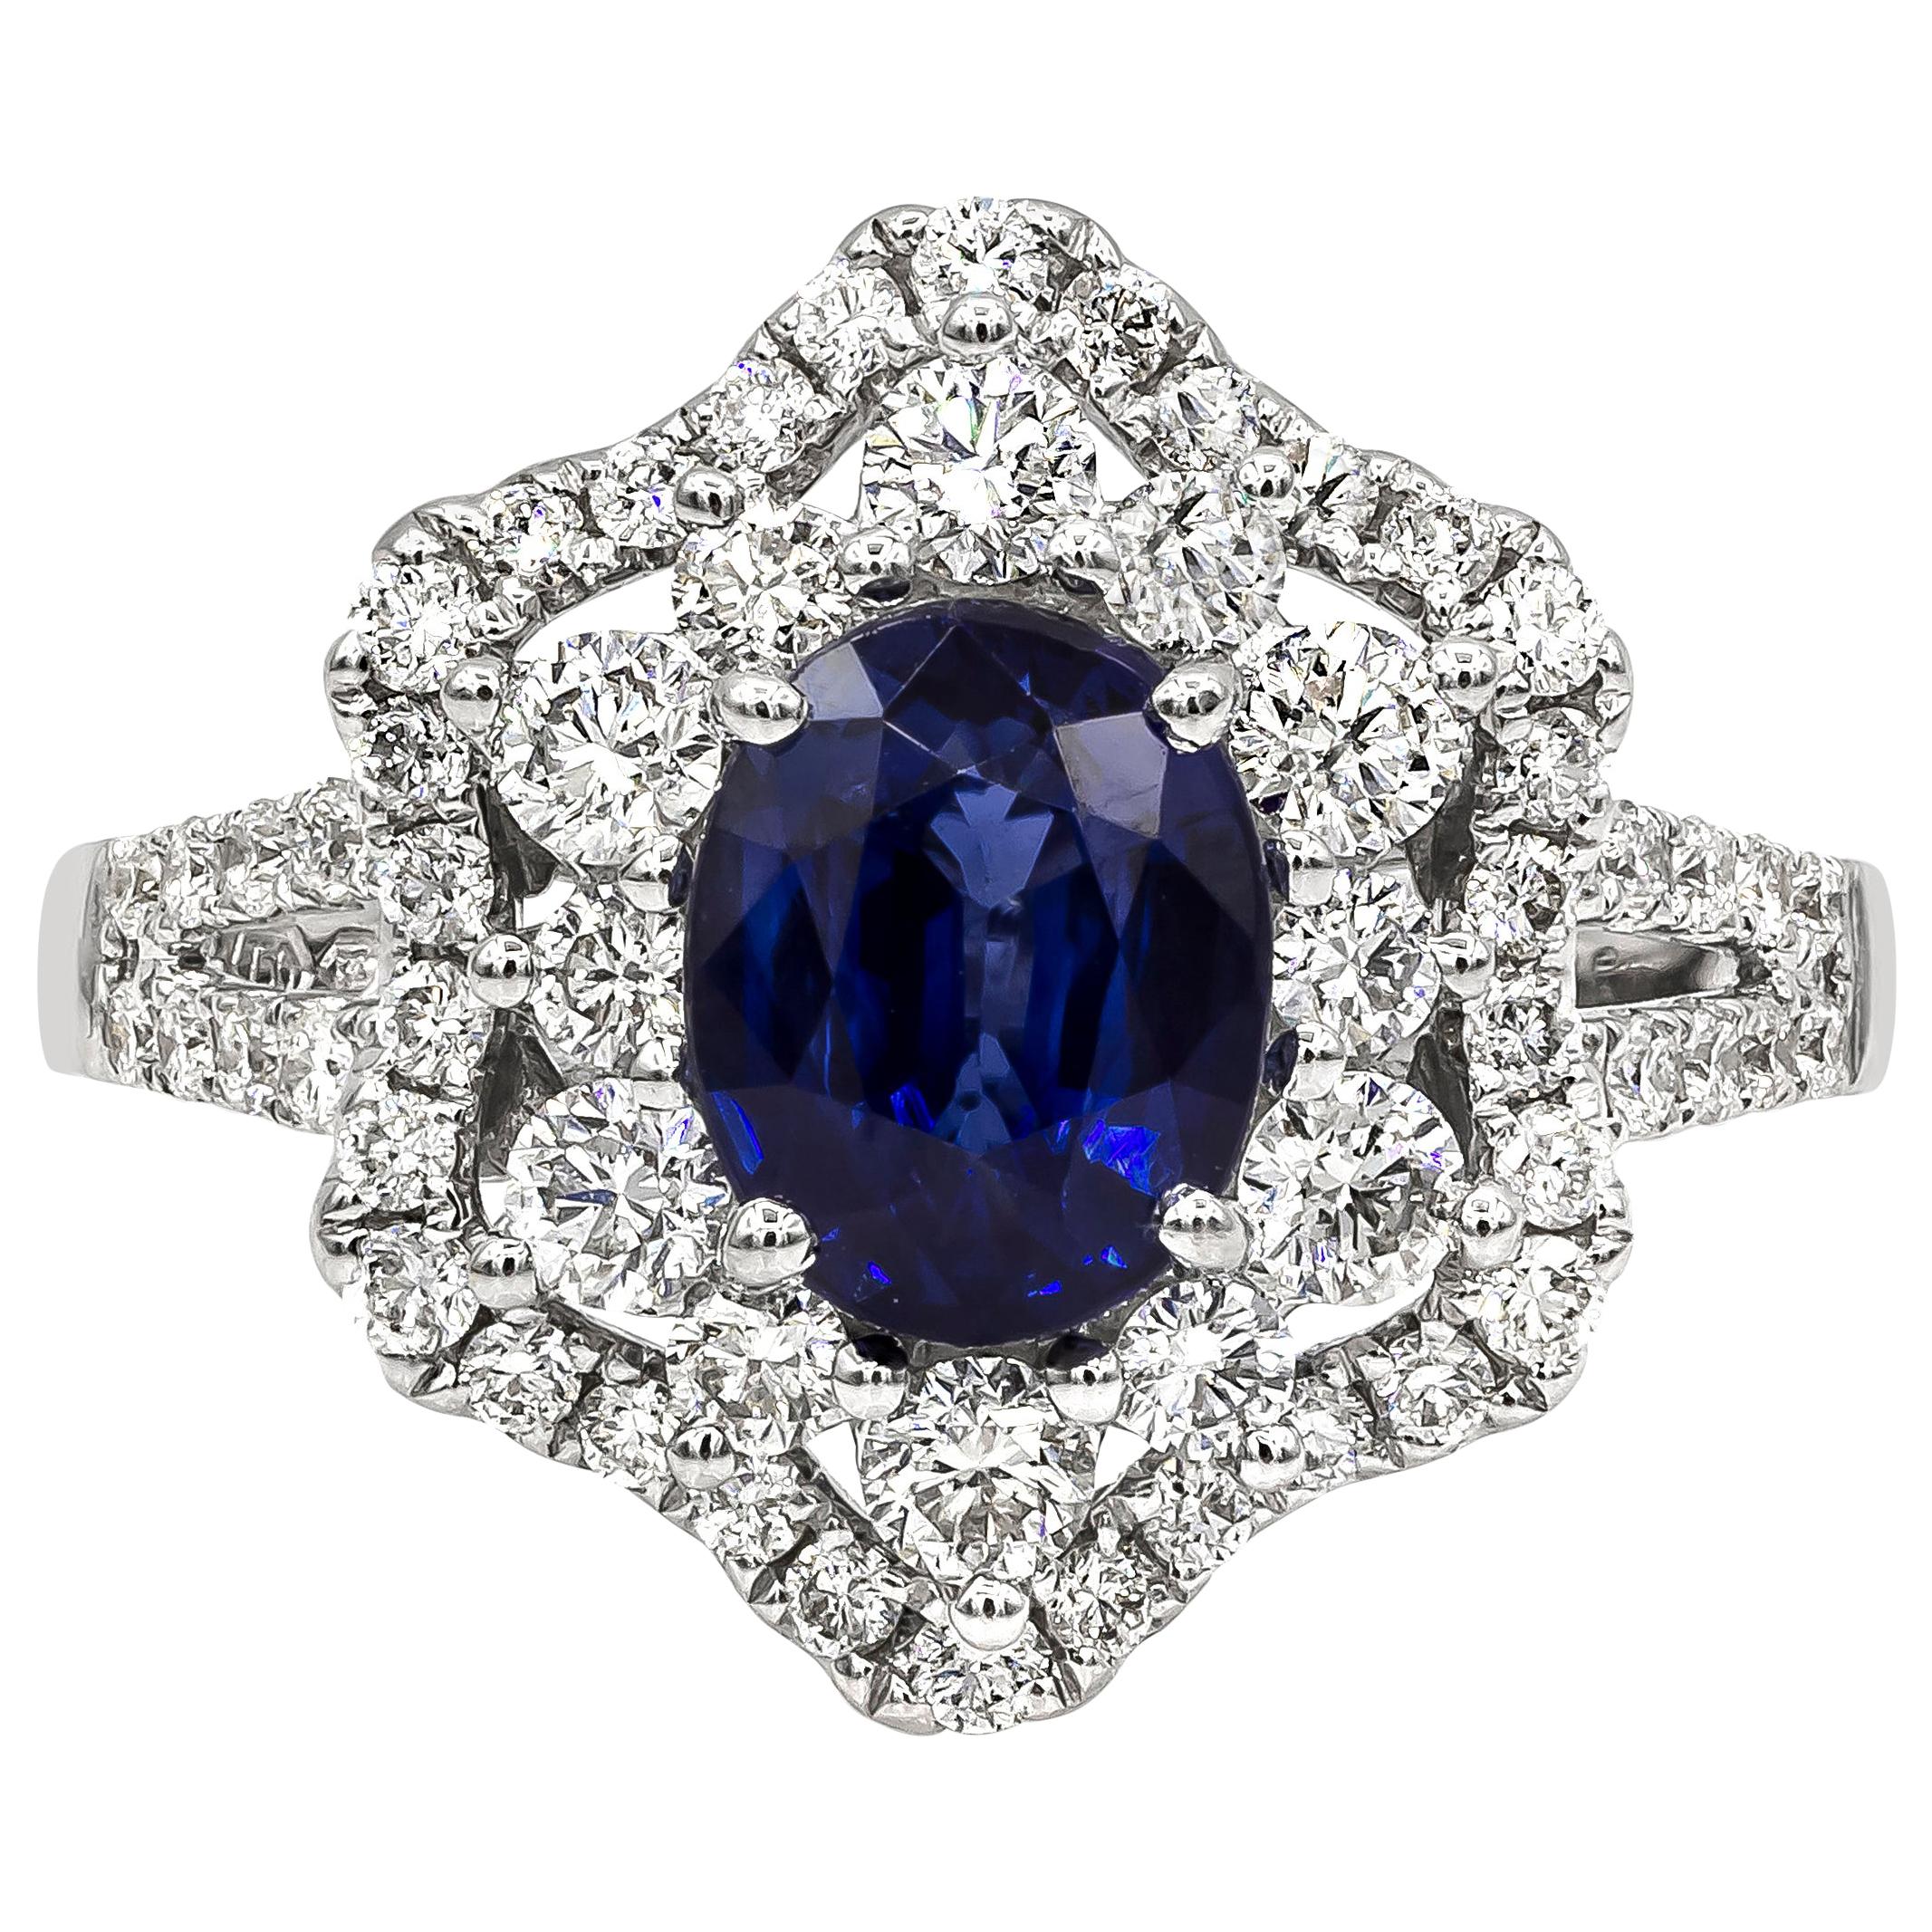 Roman Malakov 1.75 Carat Oval Cut Blue Sapphire and Diamond Halo Engagement Ring